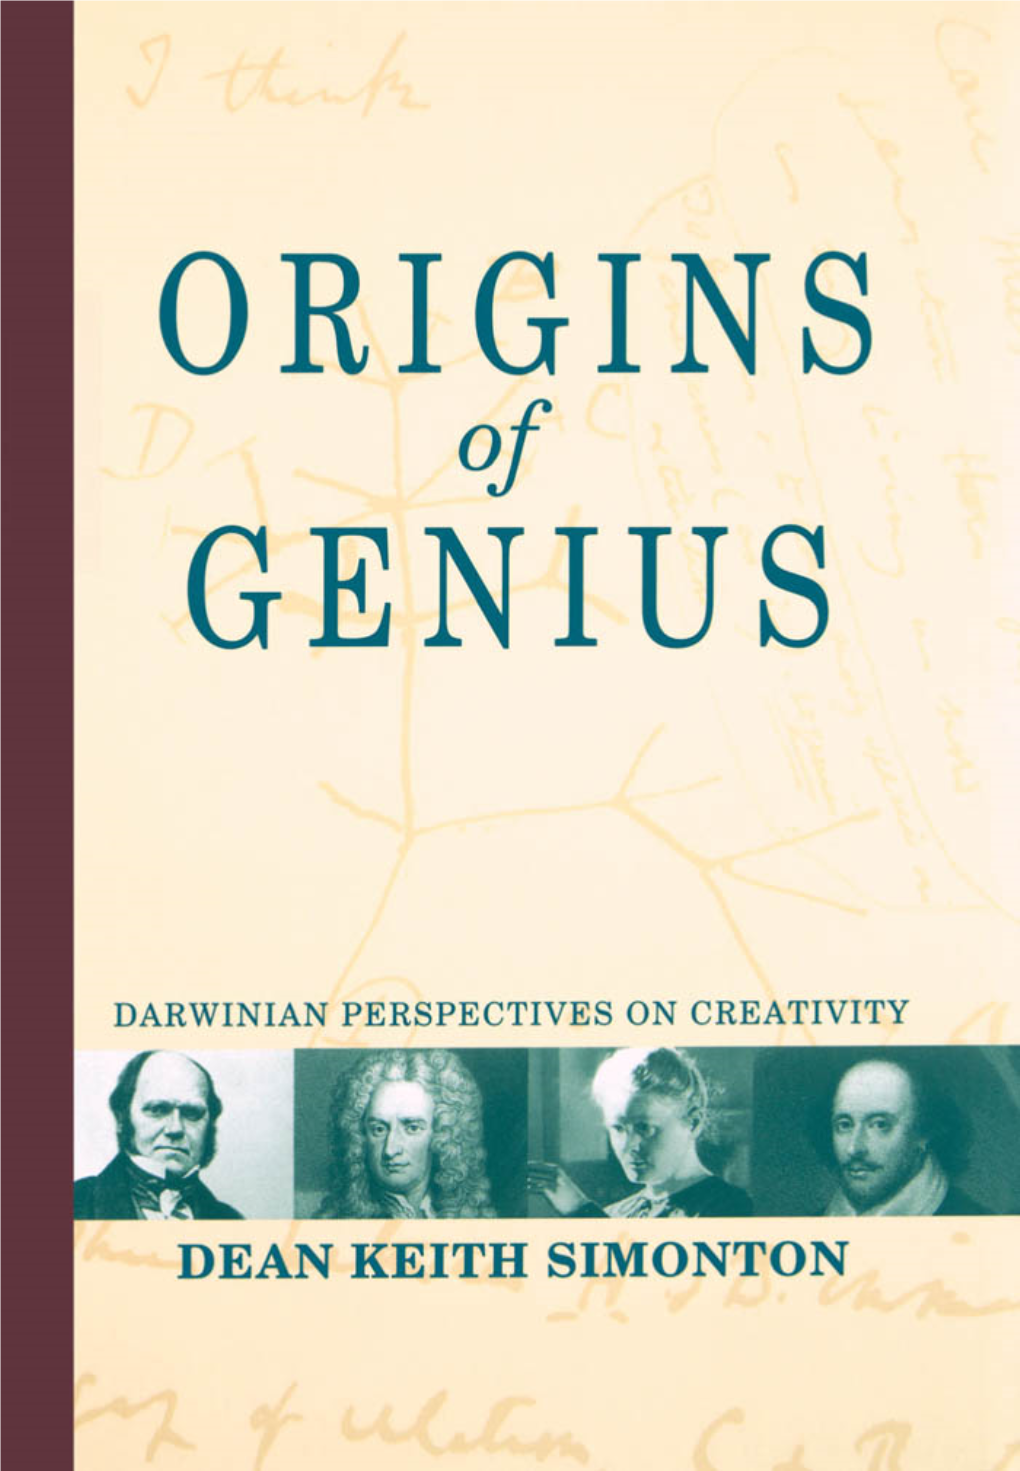 Darwinian Perspectives on Creativity